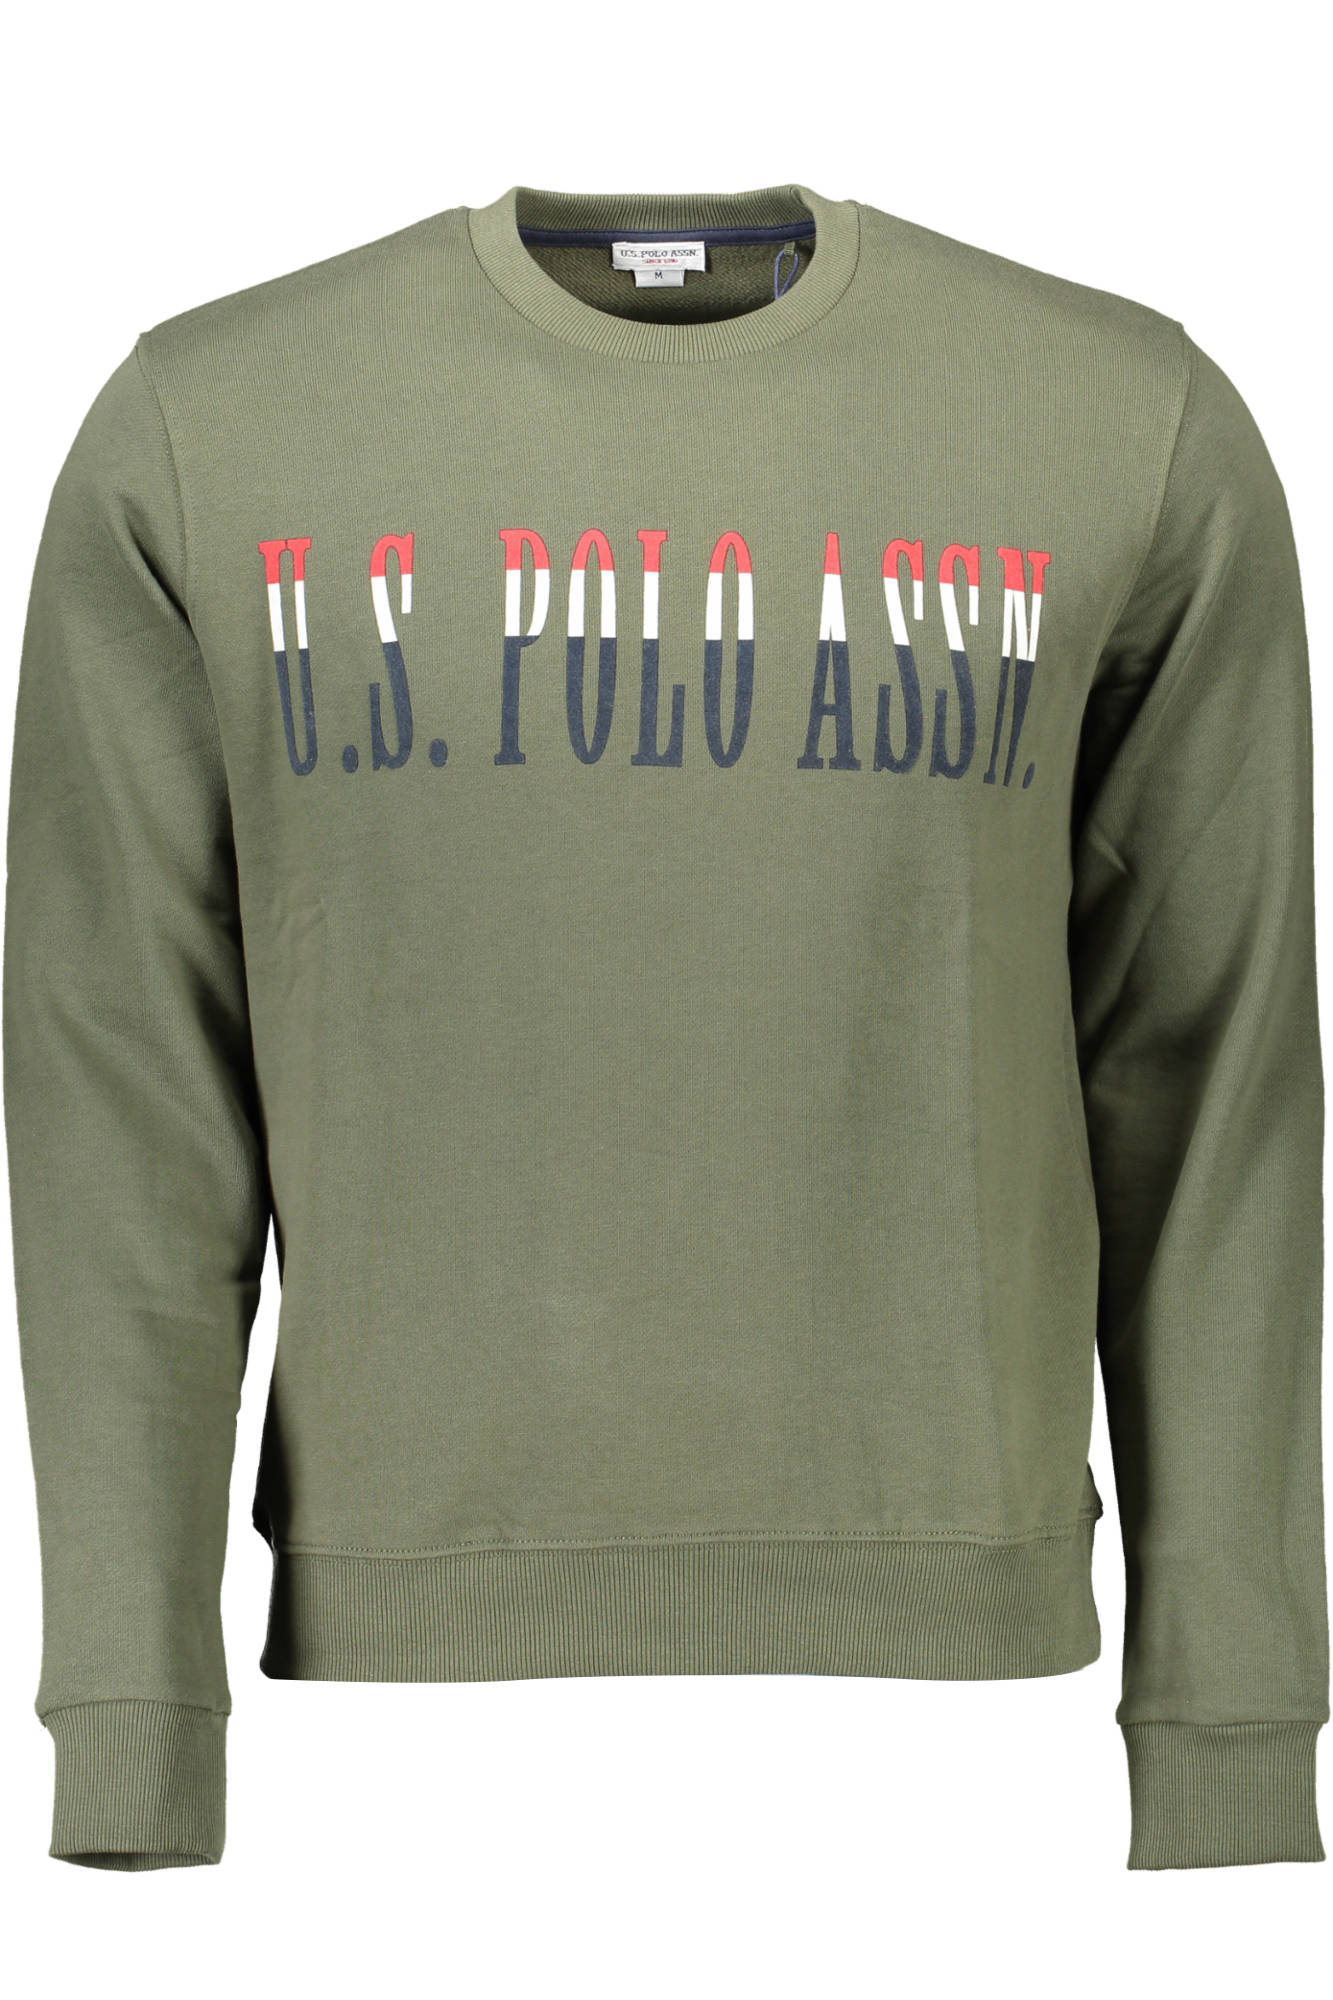 U.S. POLO ASSN. Green Sweater - Fizigo